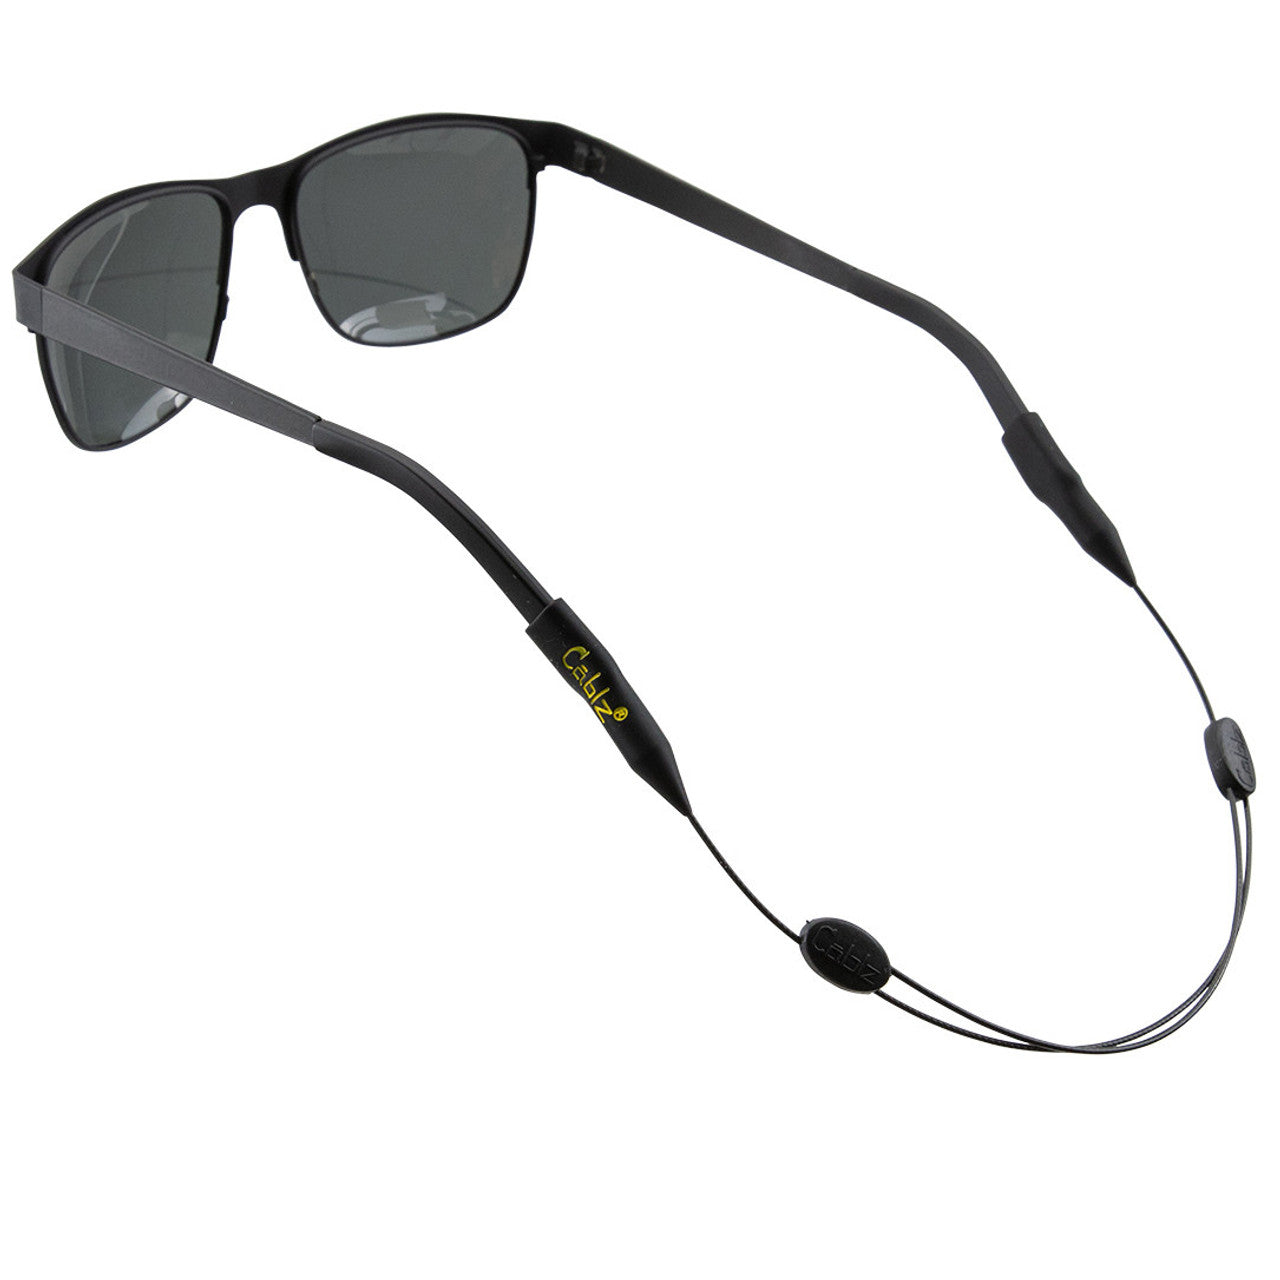 Cablz Zipz Adjustable Eyewear Retainer, 14", Black Stainless Steel